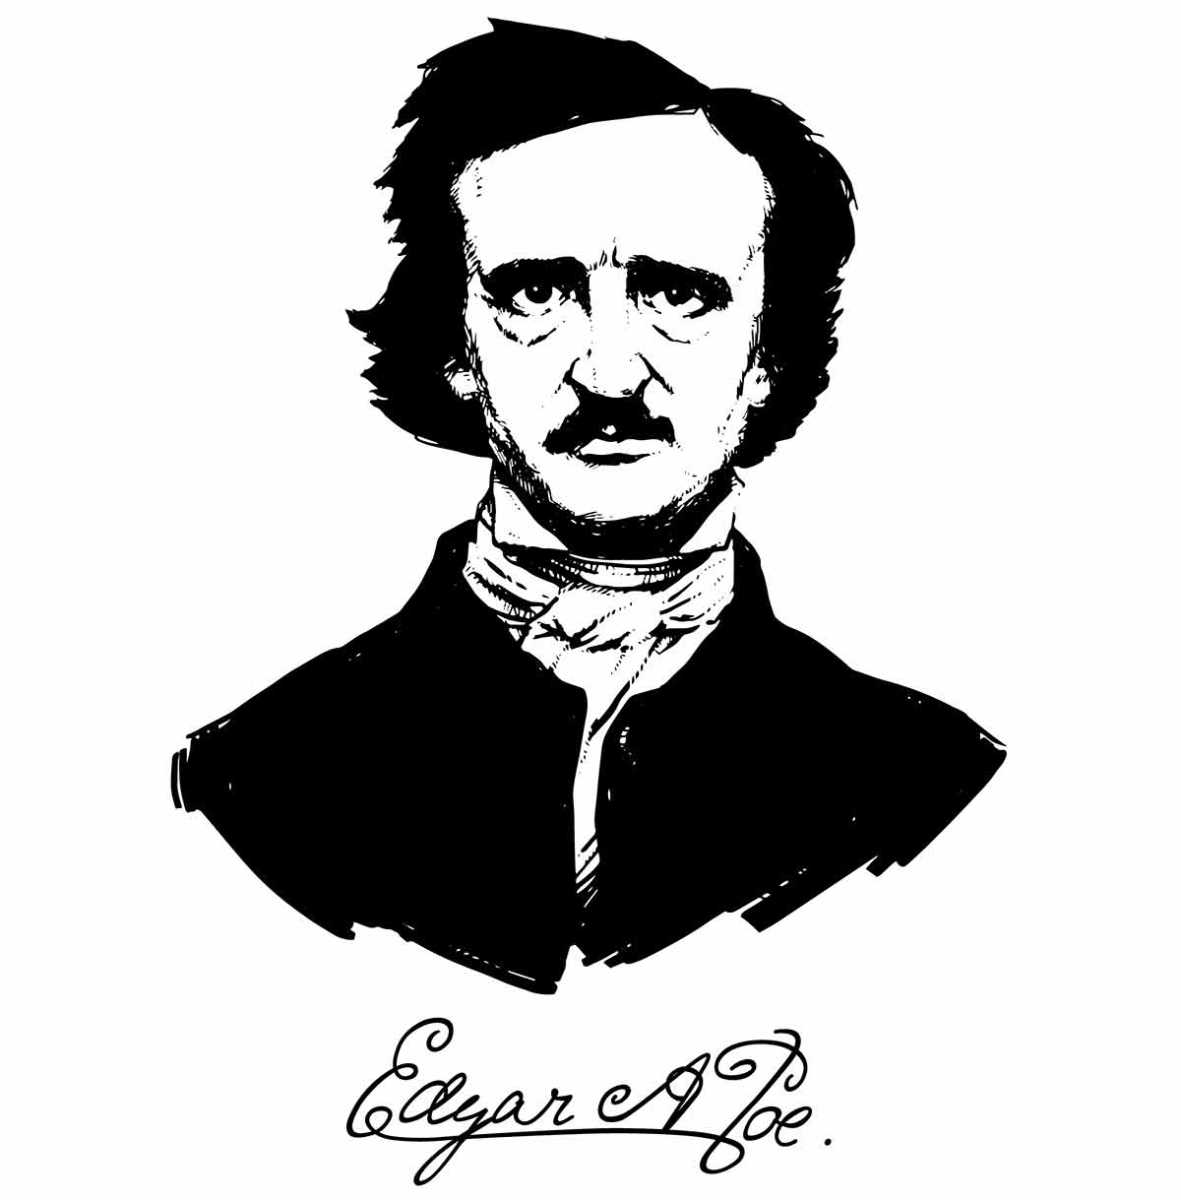 Sketch of Edgar Allen Poe in black and white